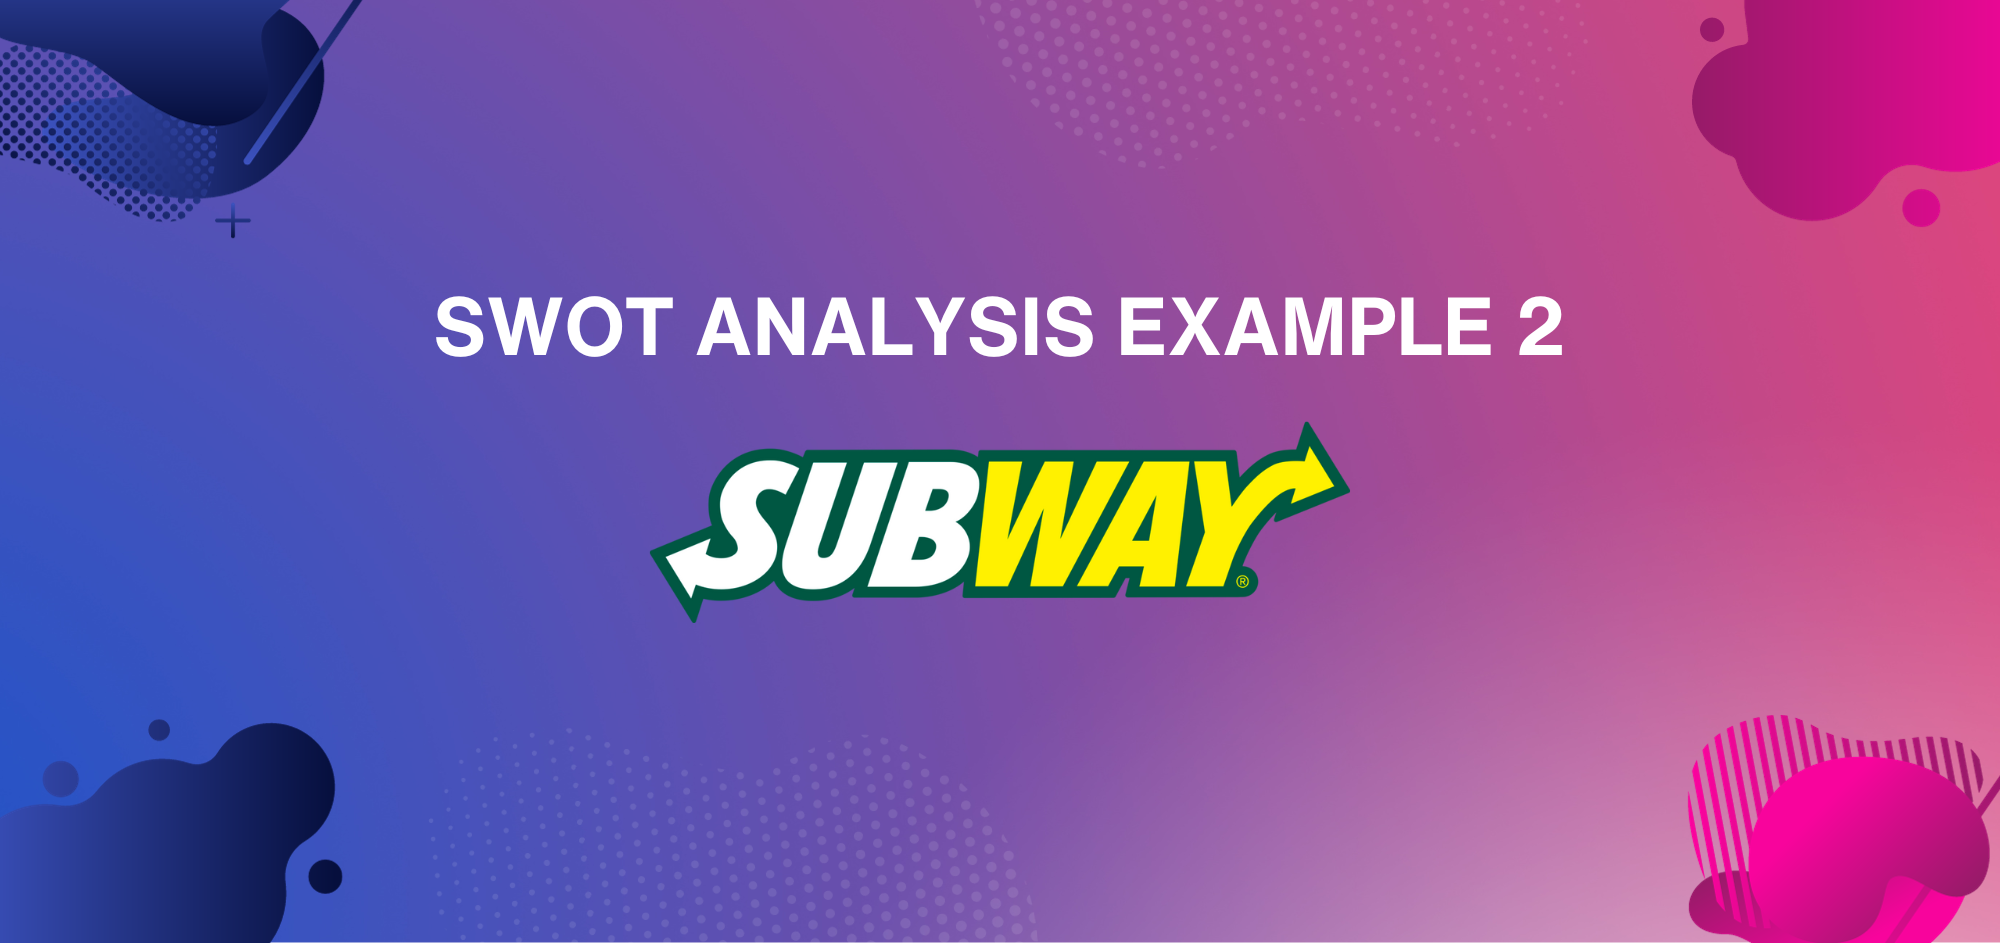 swot analysis example subway